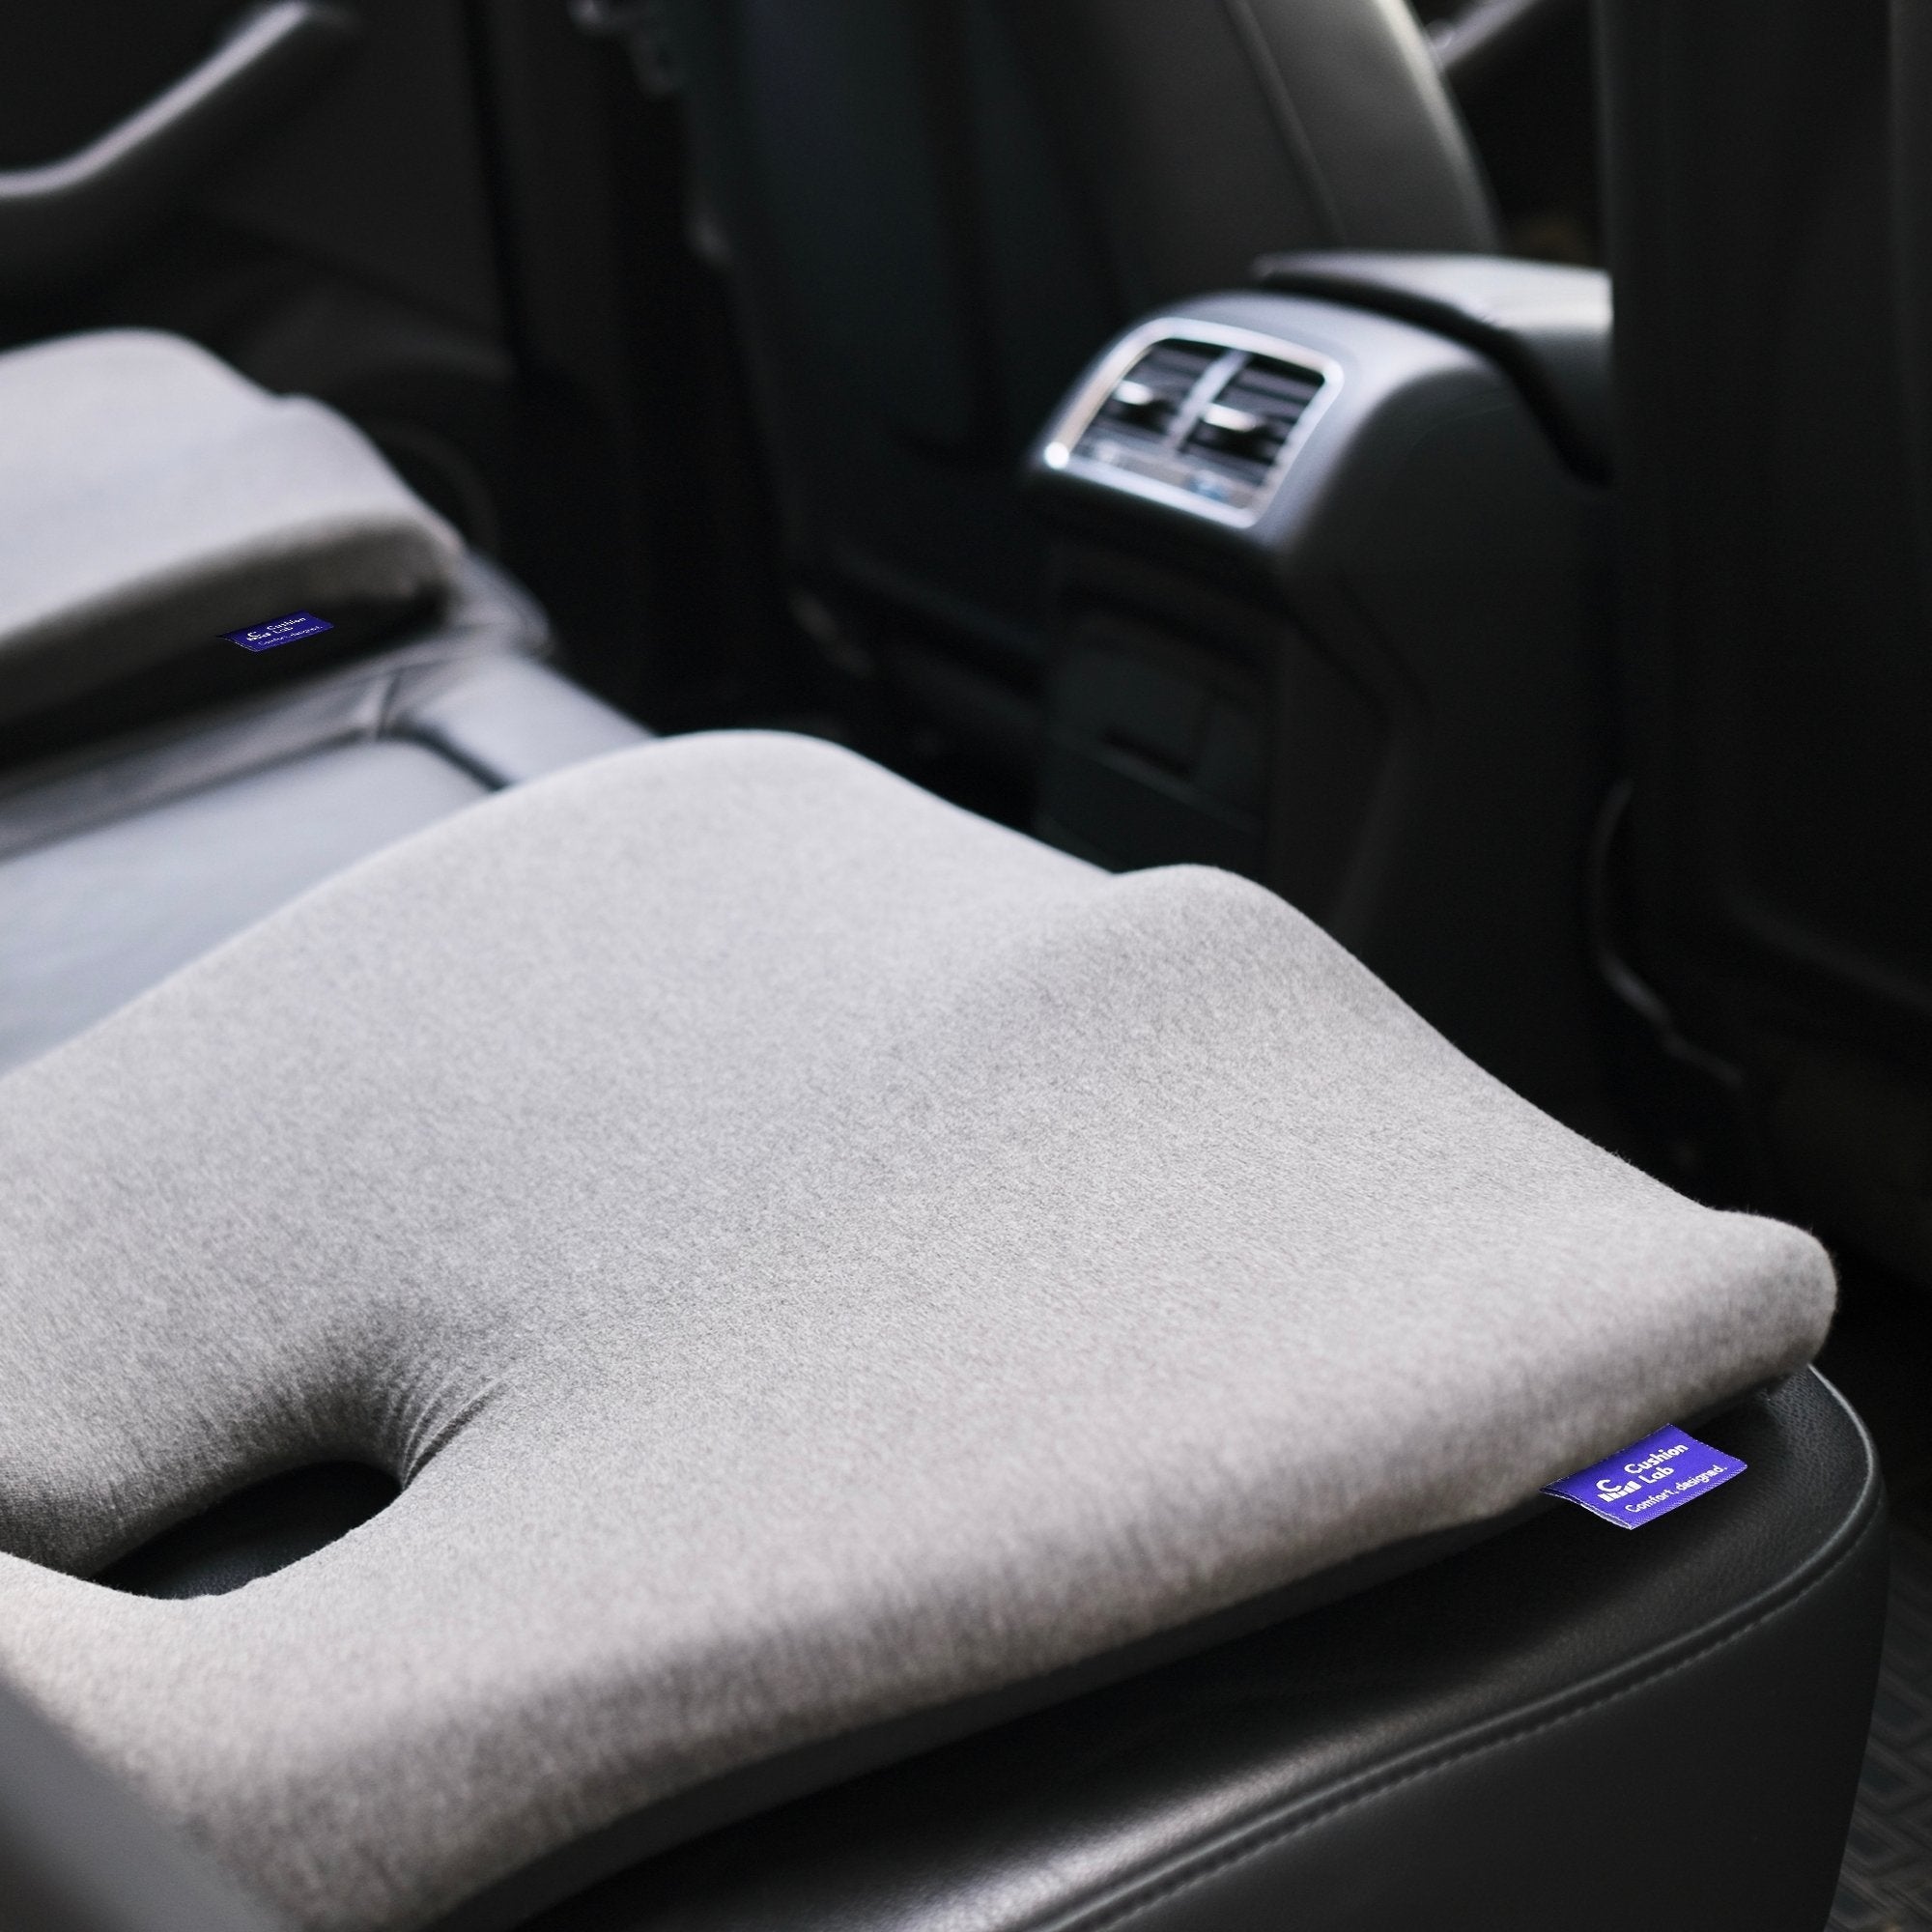 Car Seats Cushion, Driver Seats Cushion With Comfort Memory Foam & Non-Slip  Rubber 